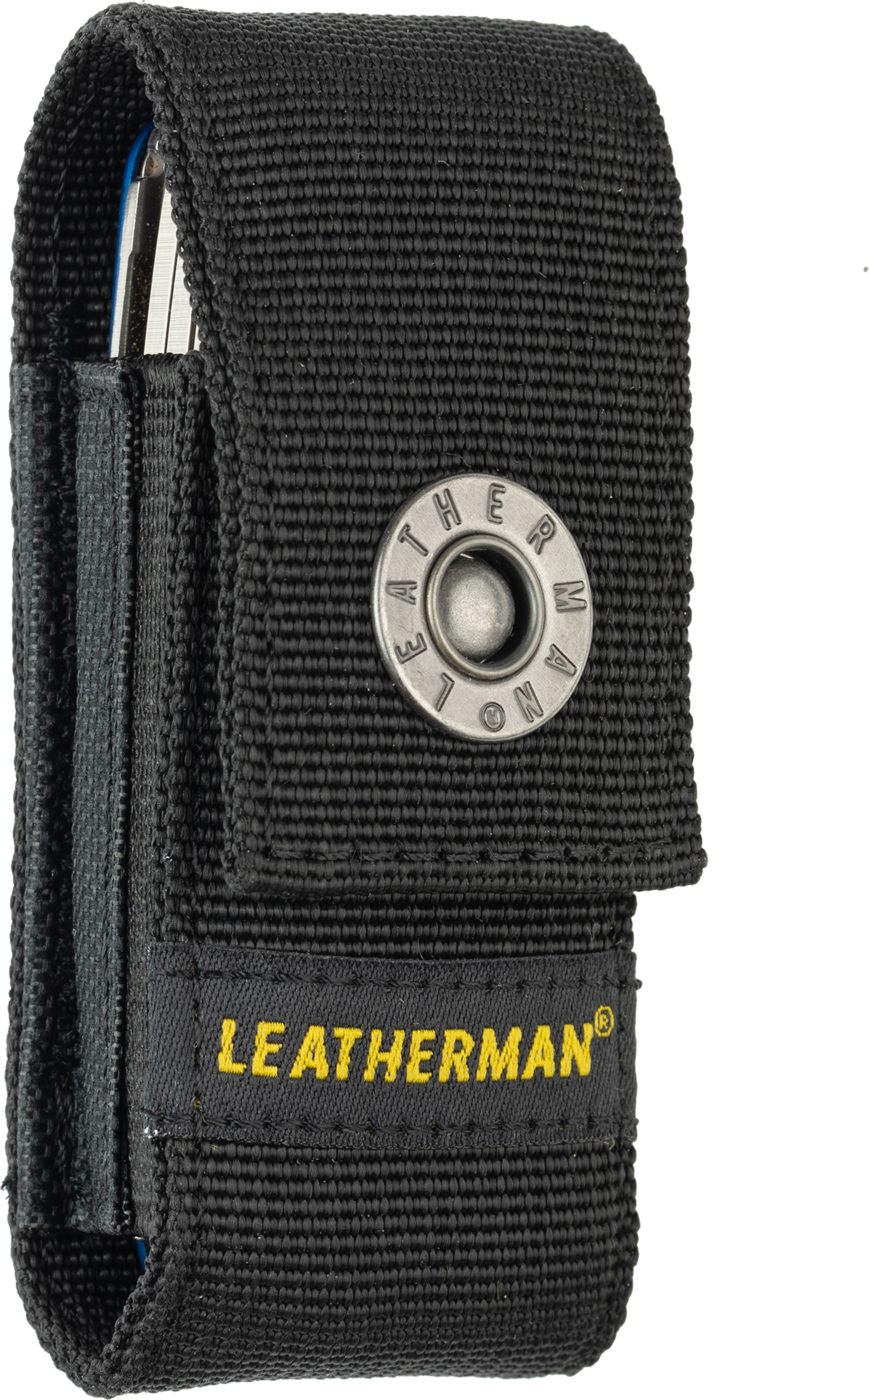 Leatherman Nylon Sheath S